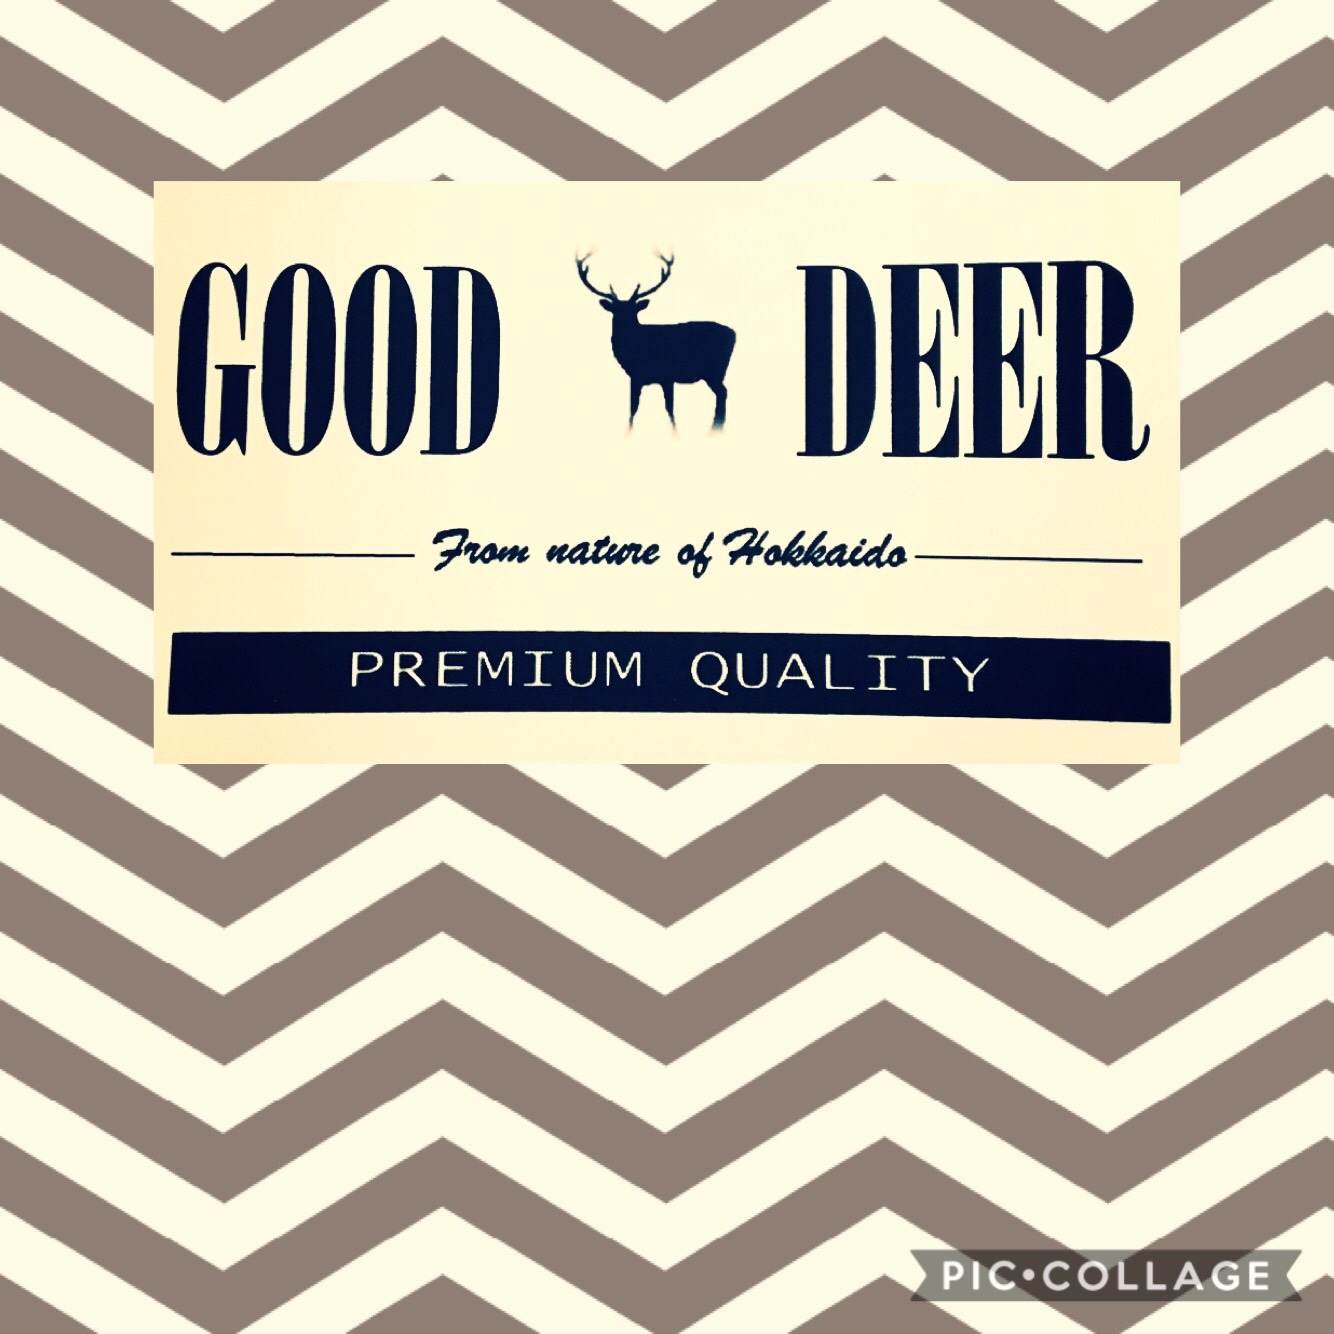 Good Deer